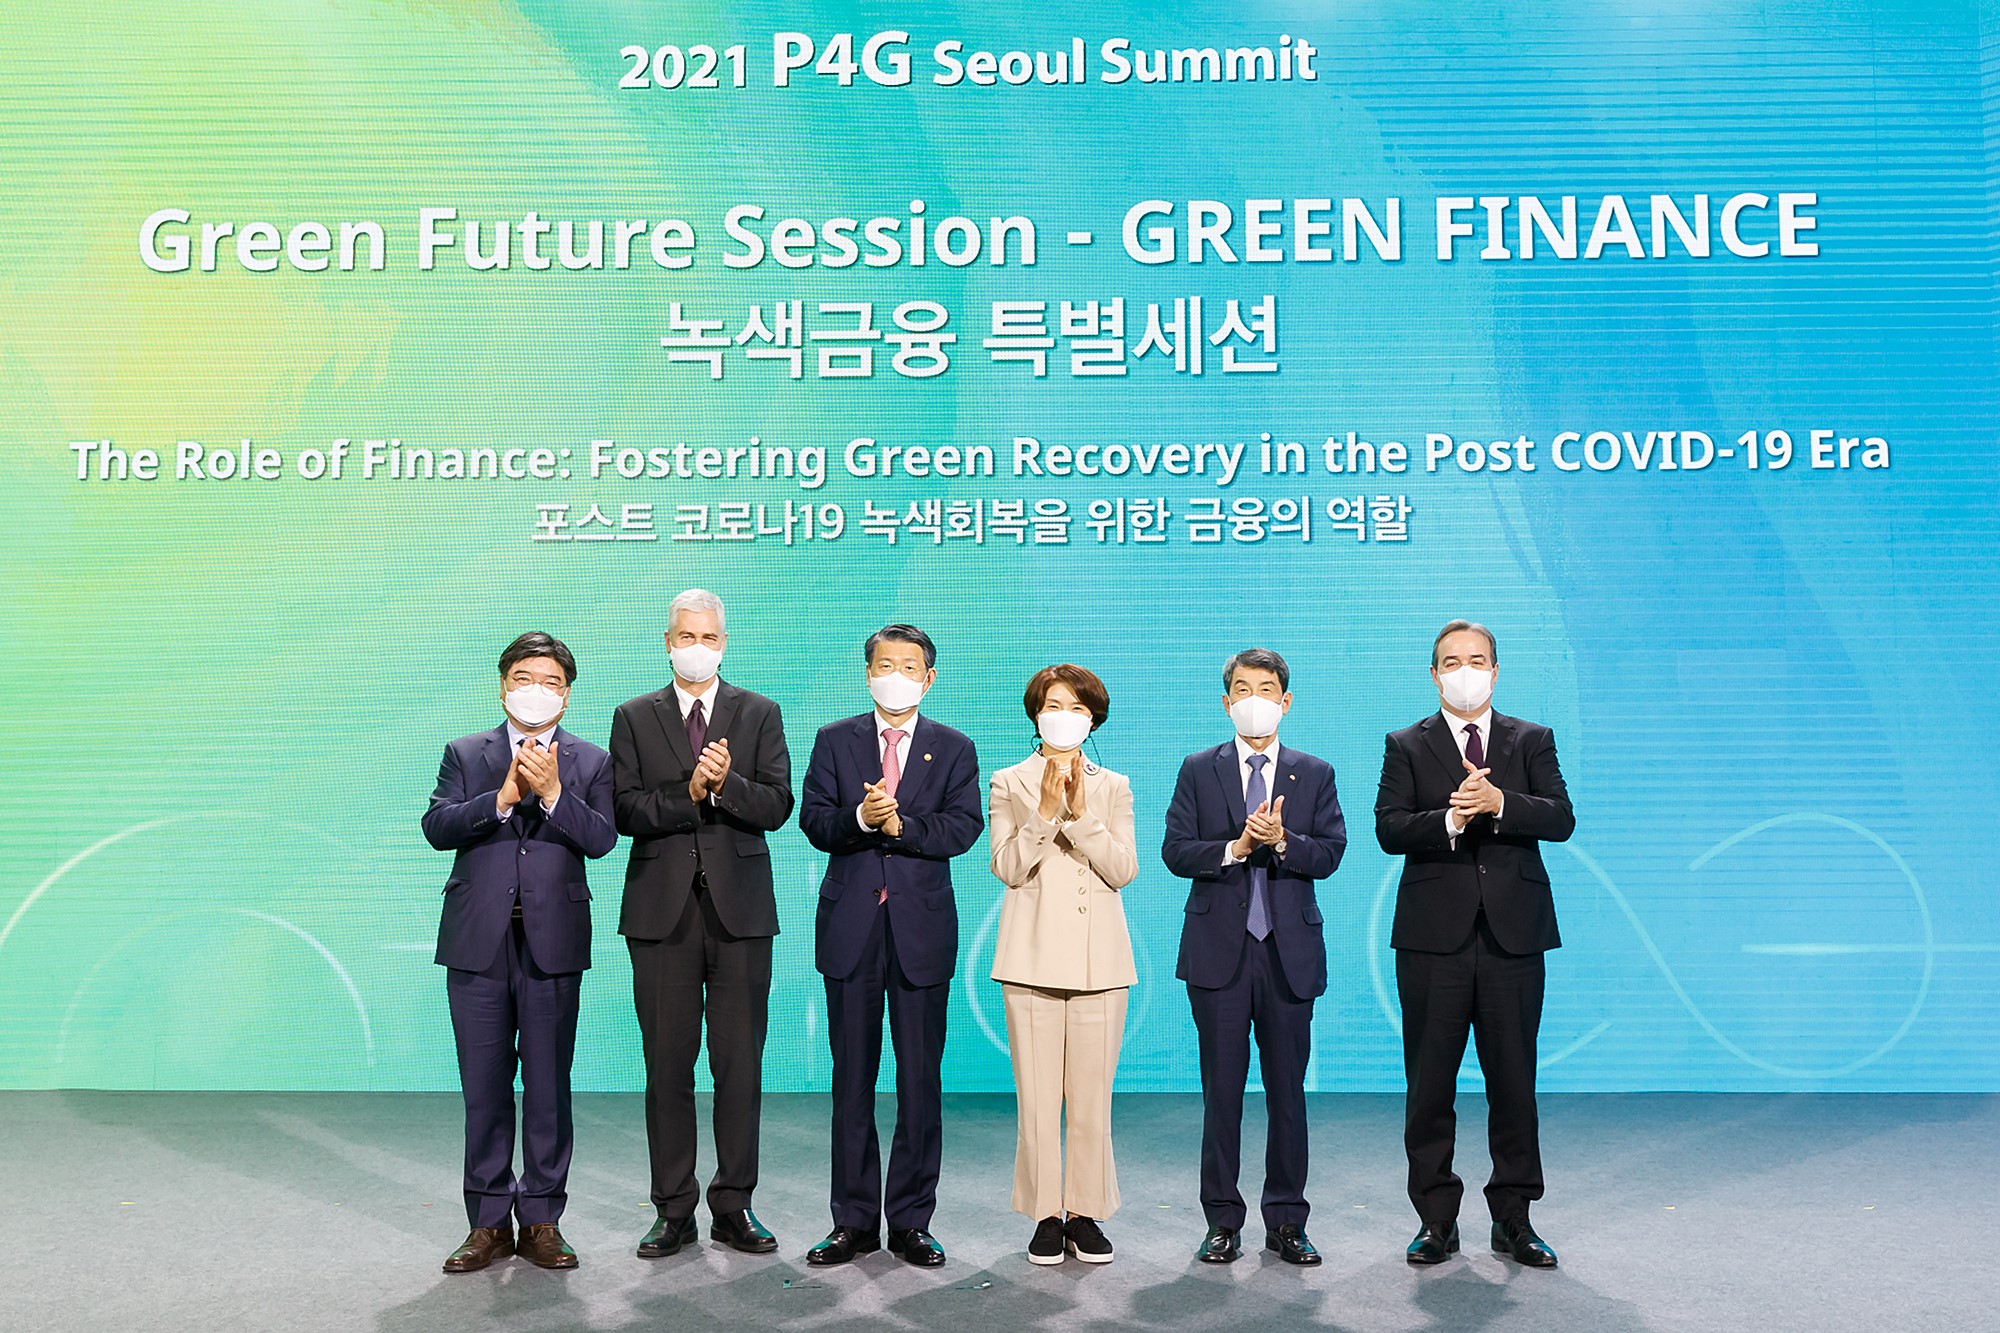 2021 P4G 서울 녹색미래 정상회의 녹색금융 특별세션 개최8